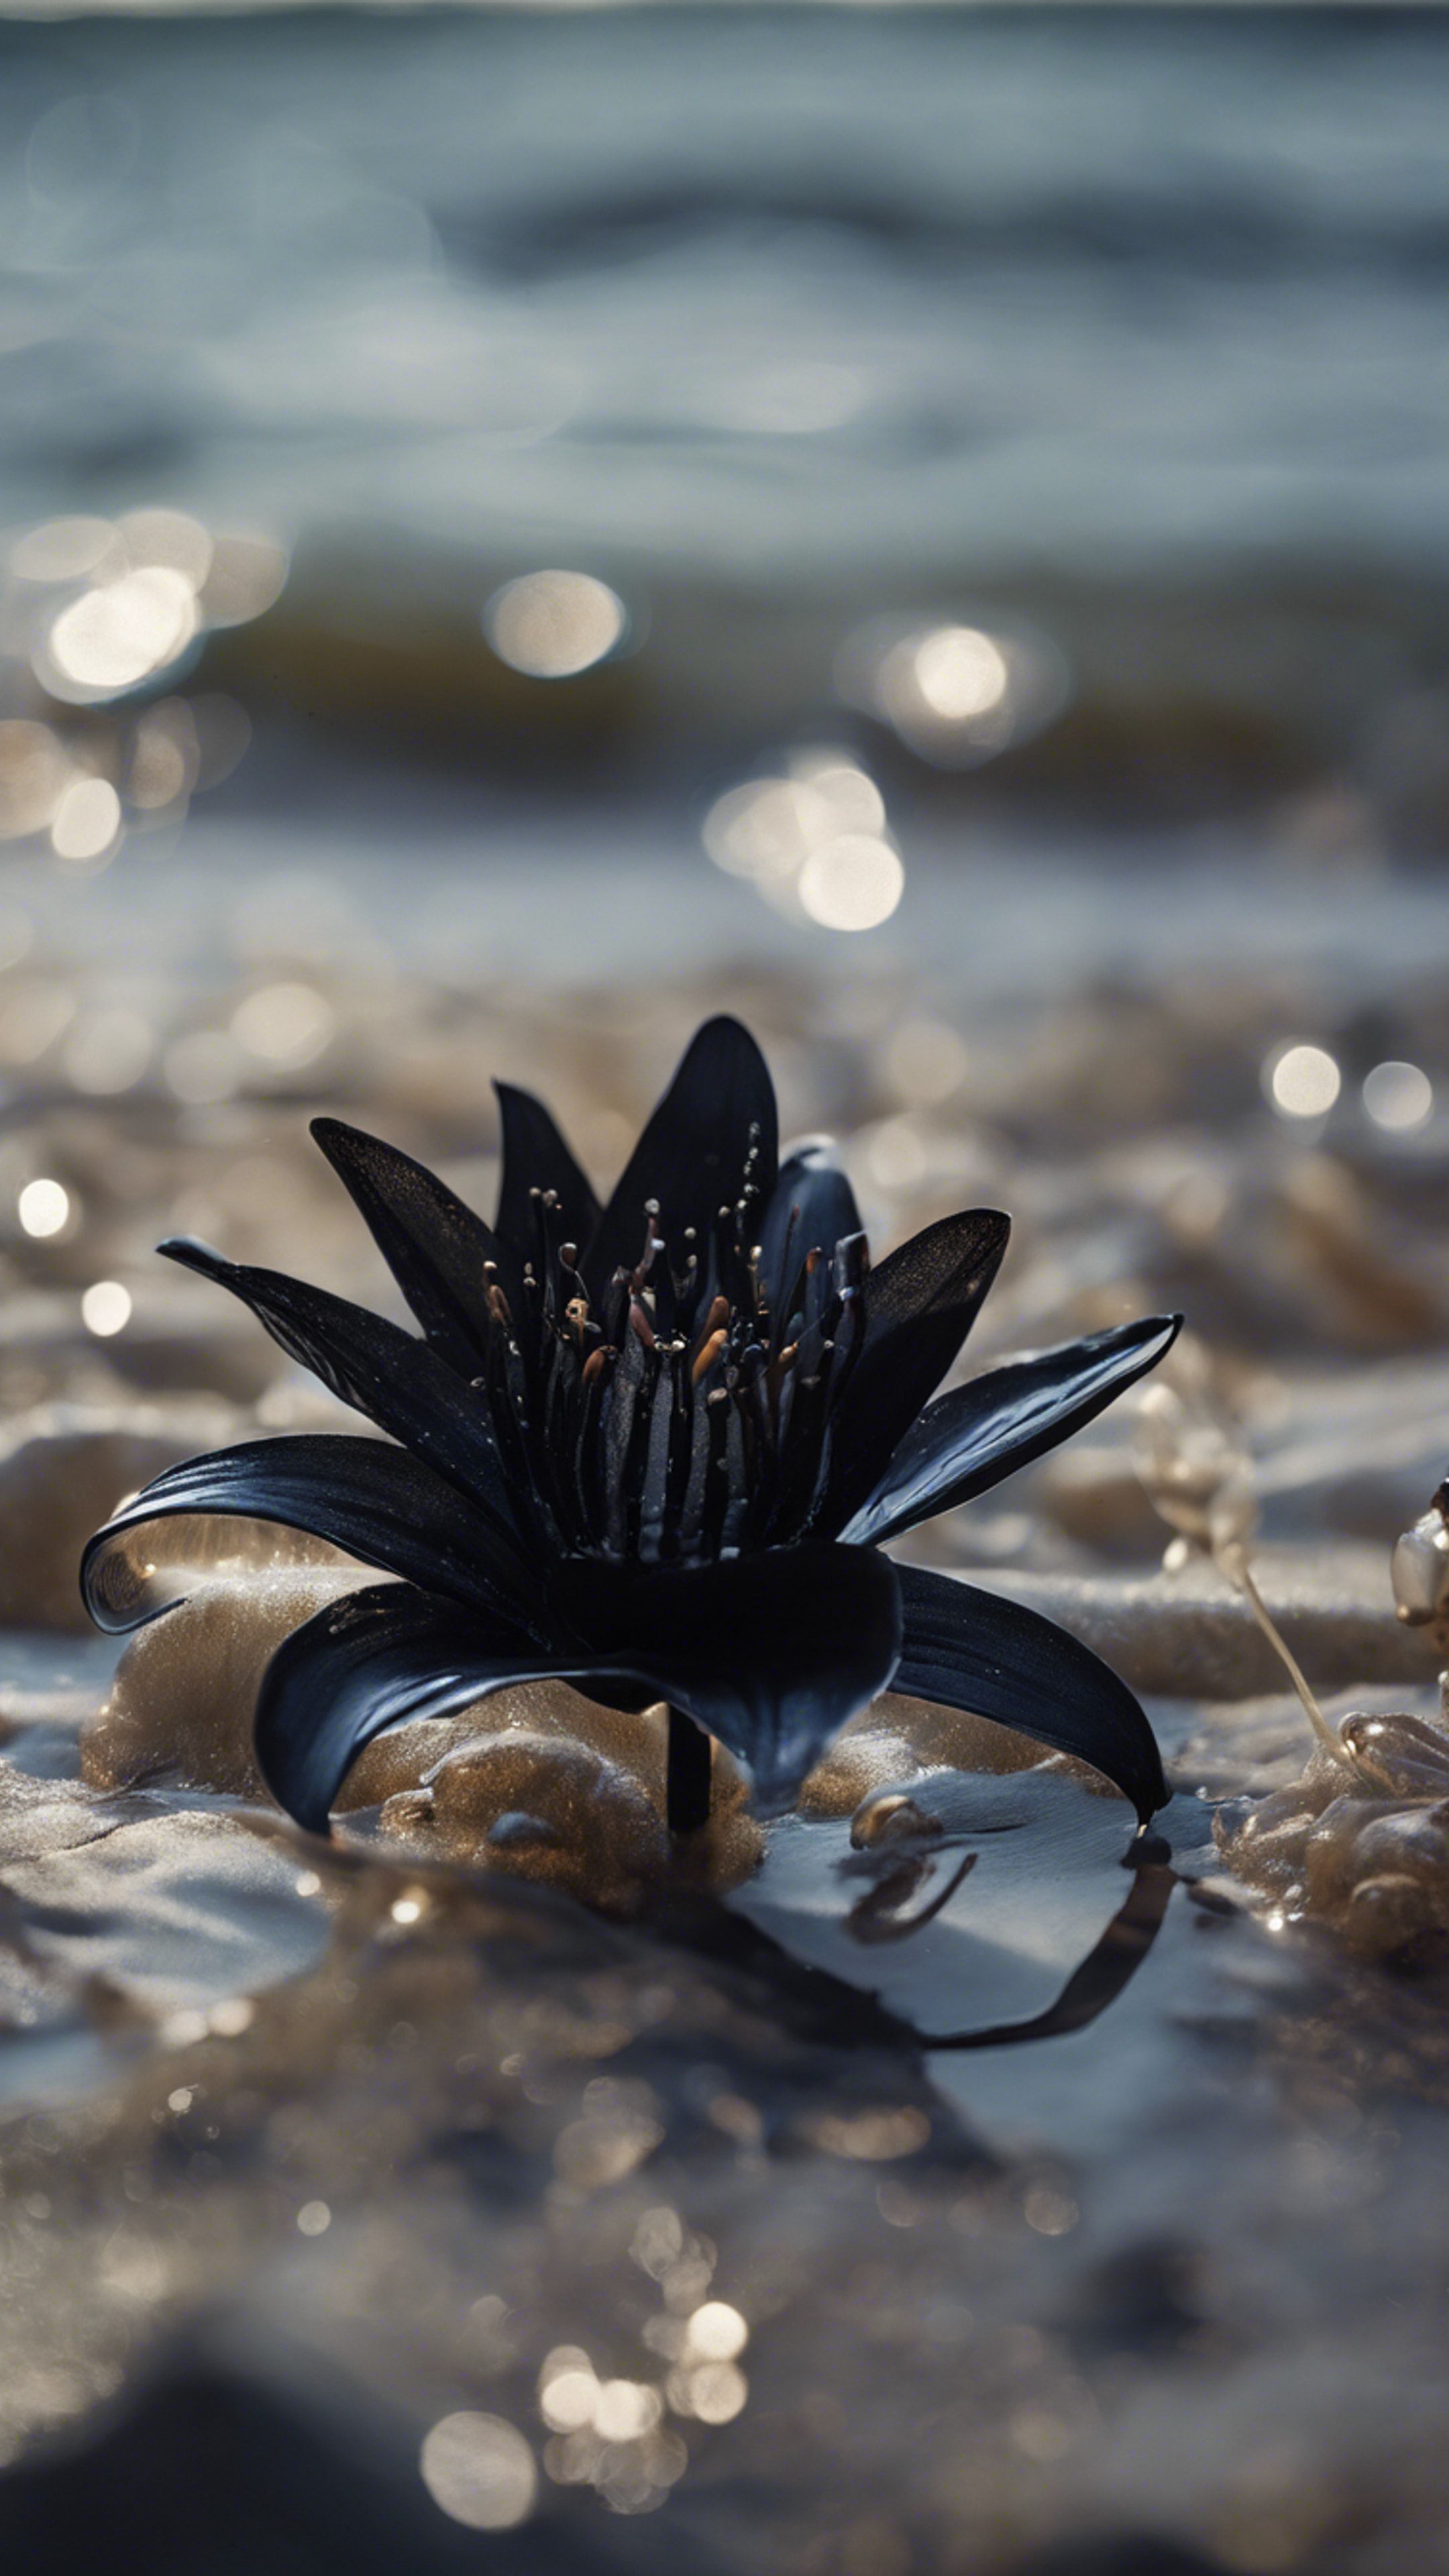 A black lily hiding under the tide, revealed only when the ocean pulls away, revealing the dark secrets of the sea bed. Divar kağızı[3833c30c18c941348380]